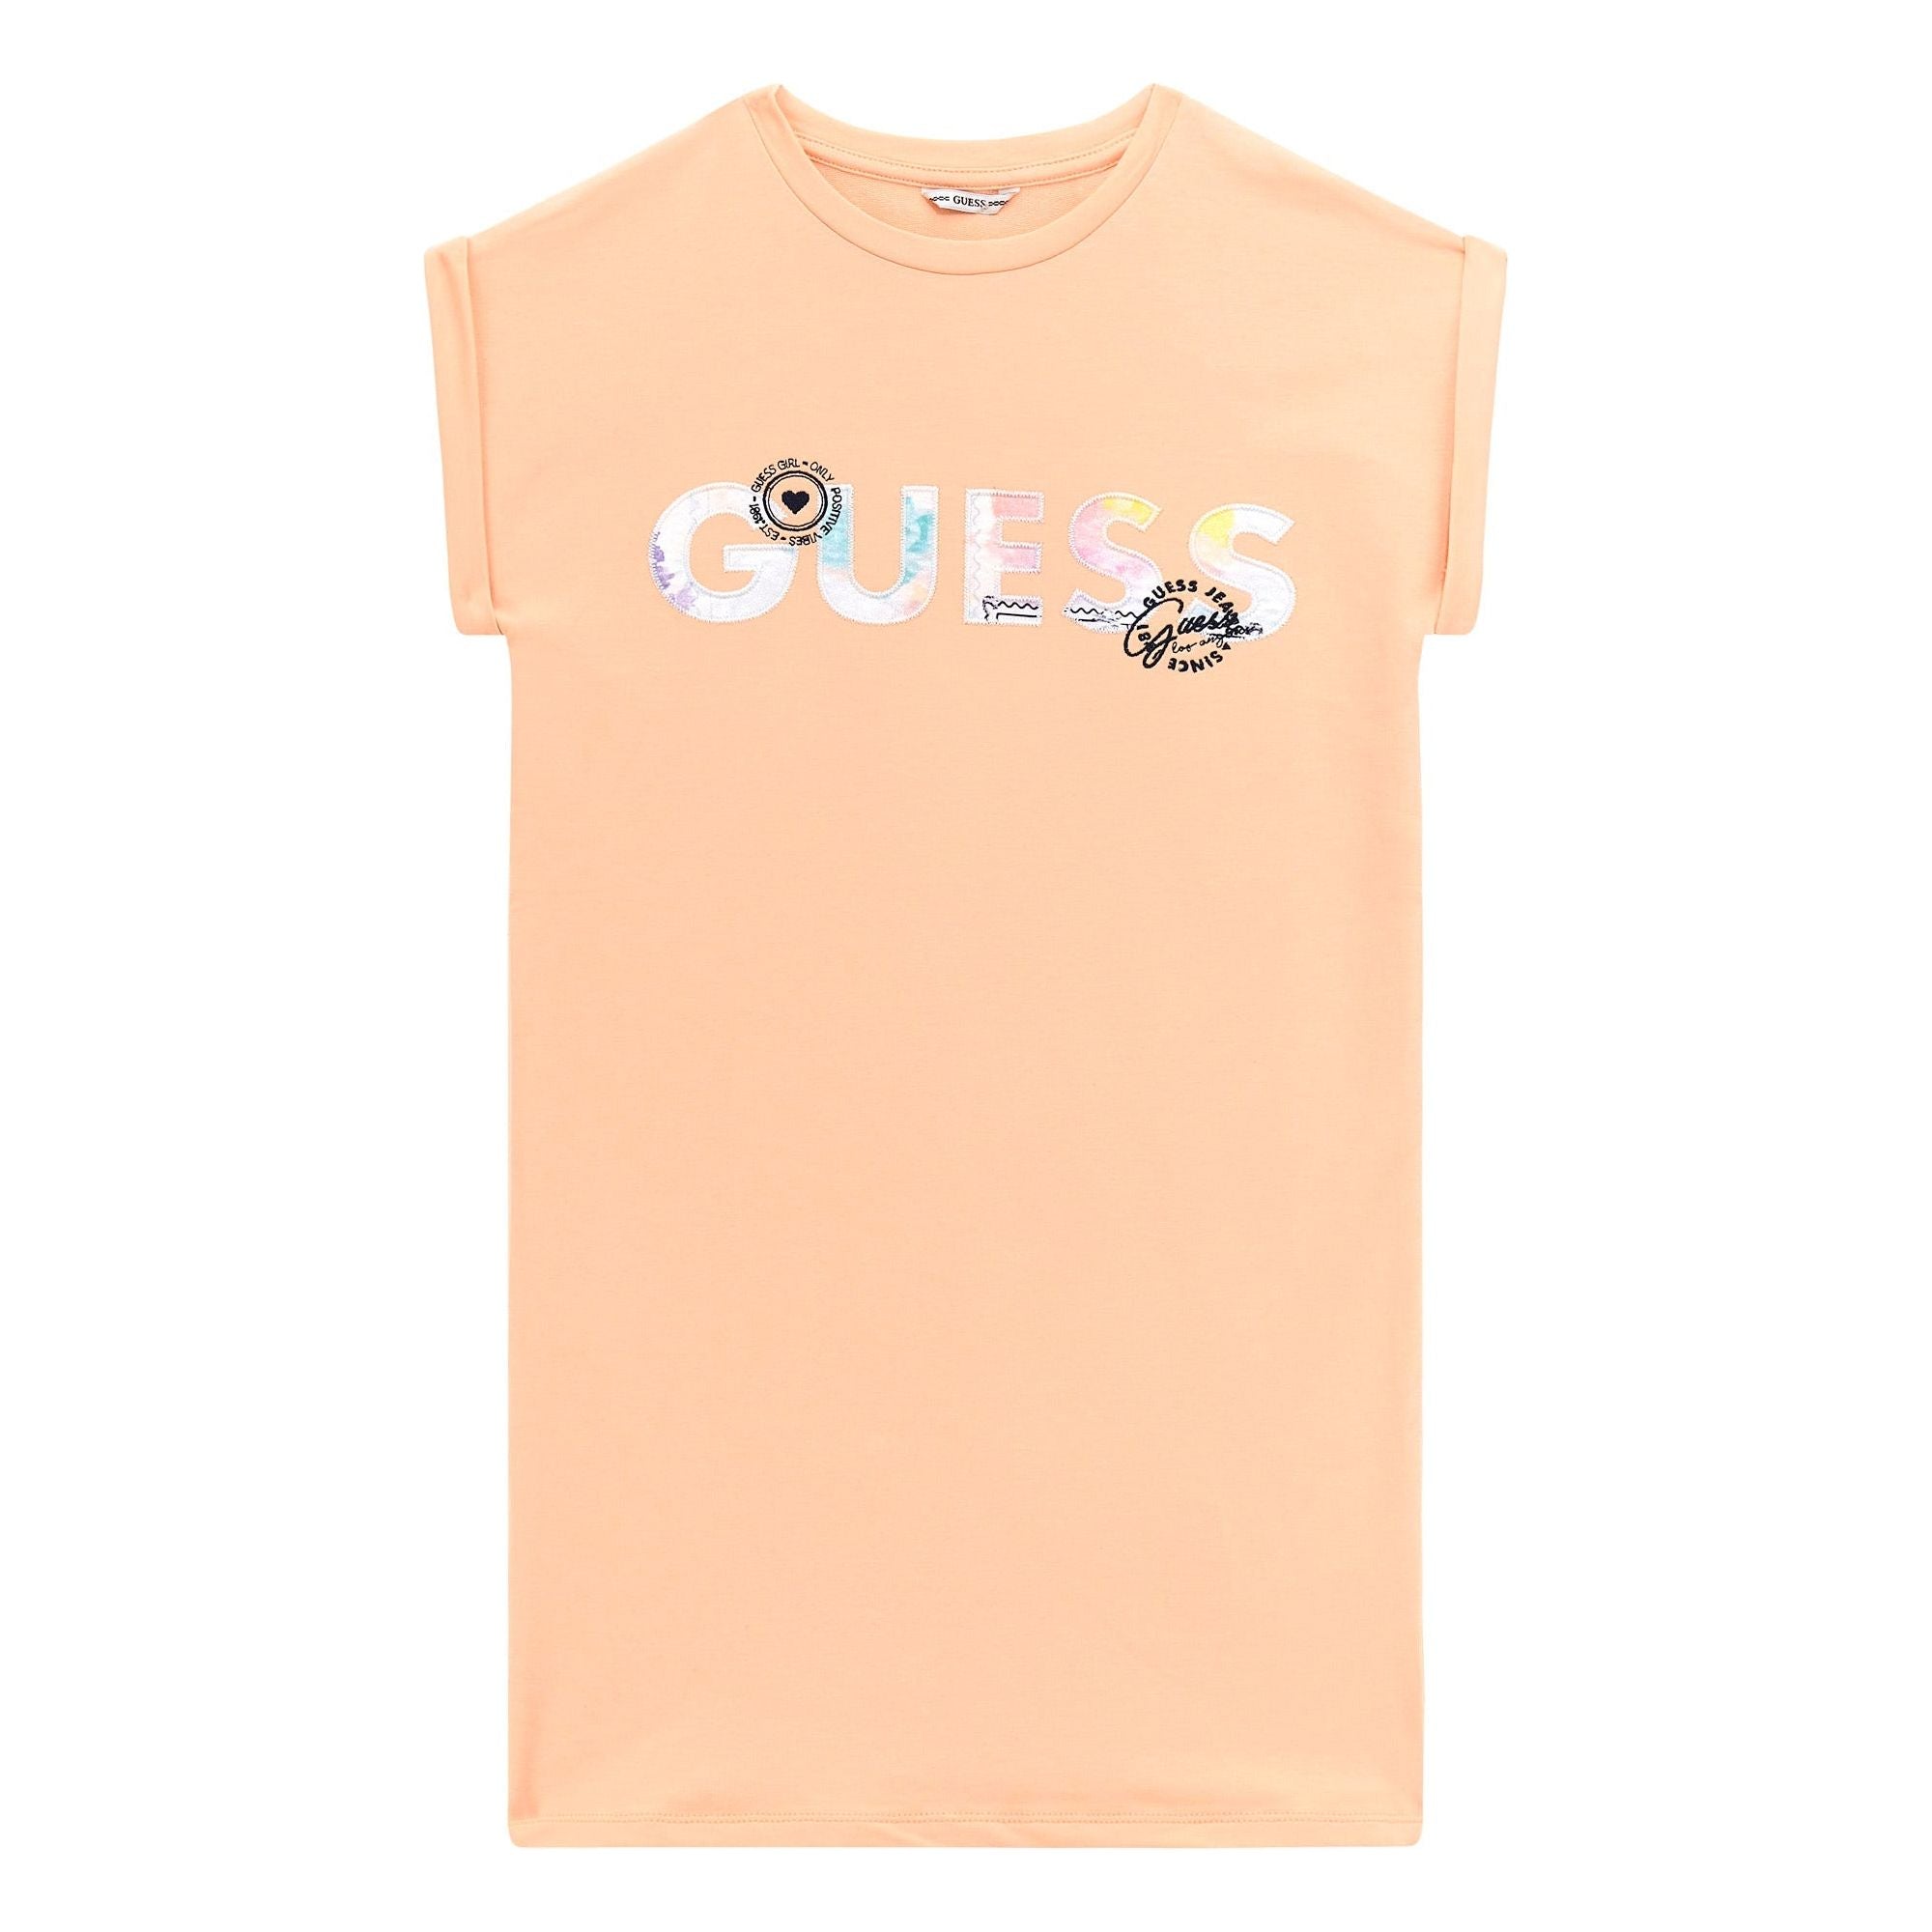 Guess - T-Shirt Dress in Peach Creme